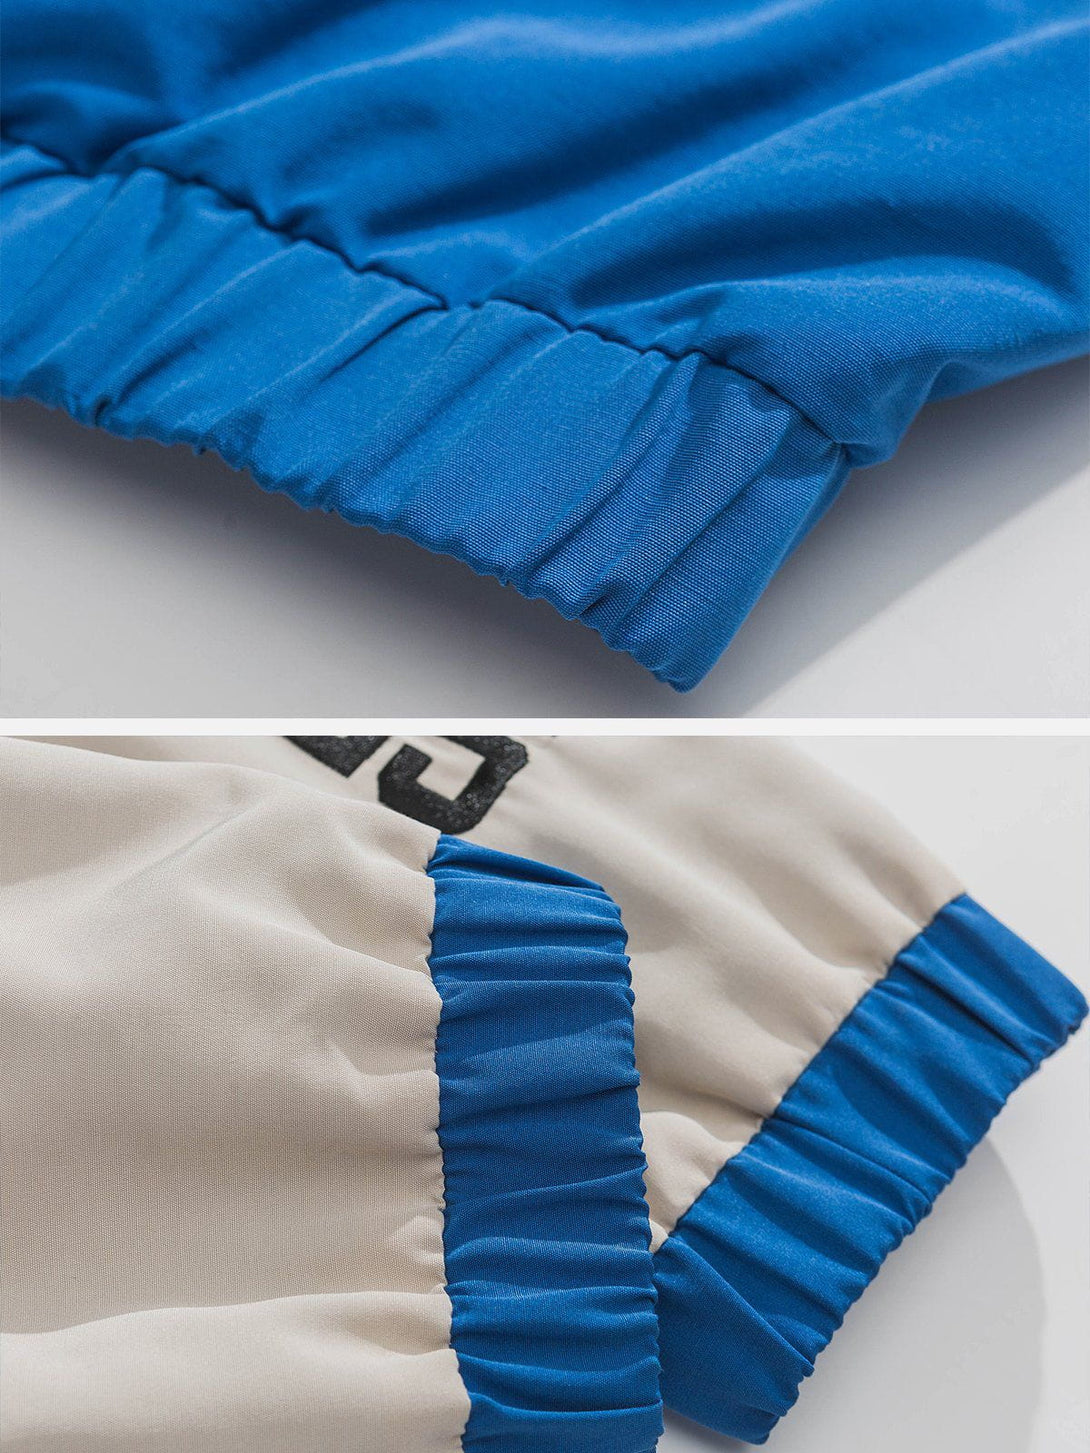 Majesda® - Contrasting Embroidered Racing Jacket outfit ideas, streetwear fashion - majesda.com